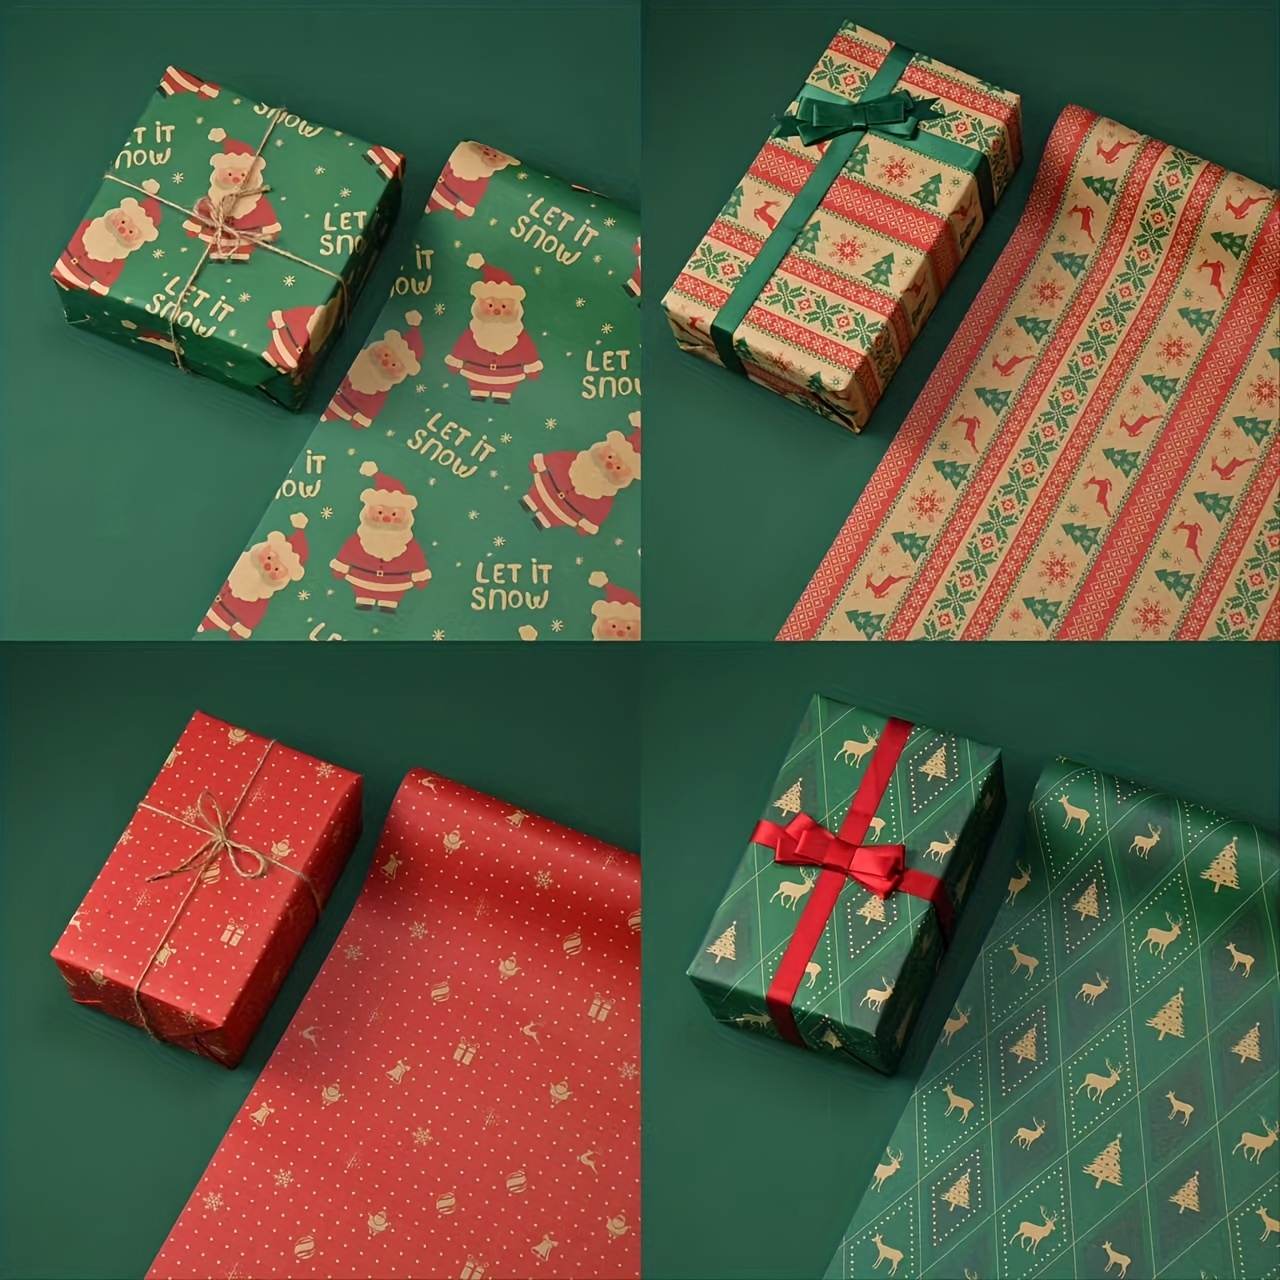 4 x 10m Christmas Wrapping Paper Rolls - Kids Snowman/Santa